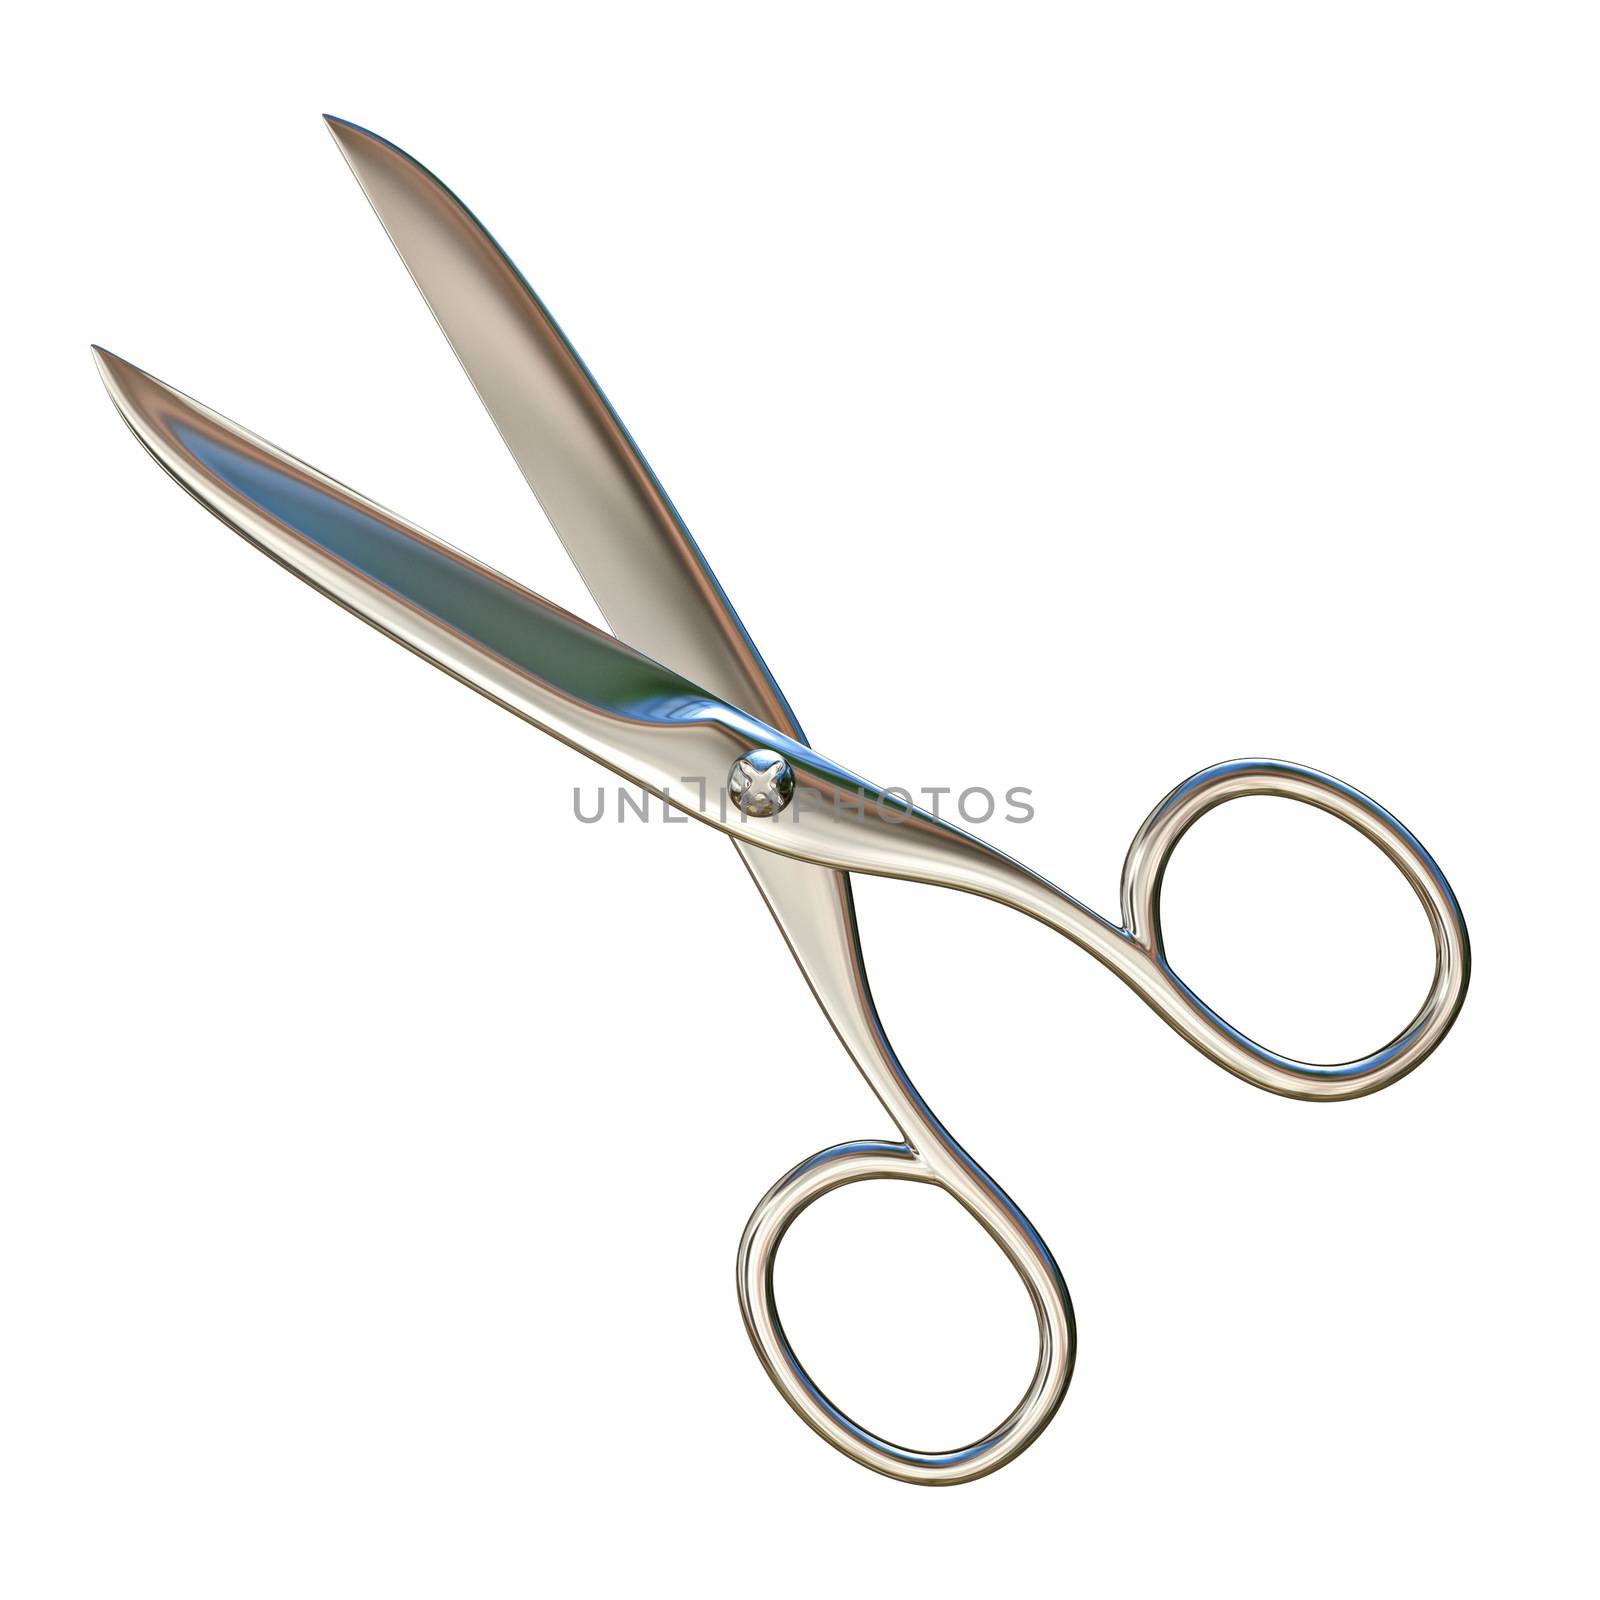 Metal scissors 3D by djmilic